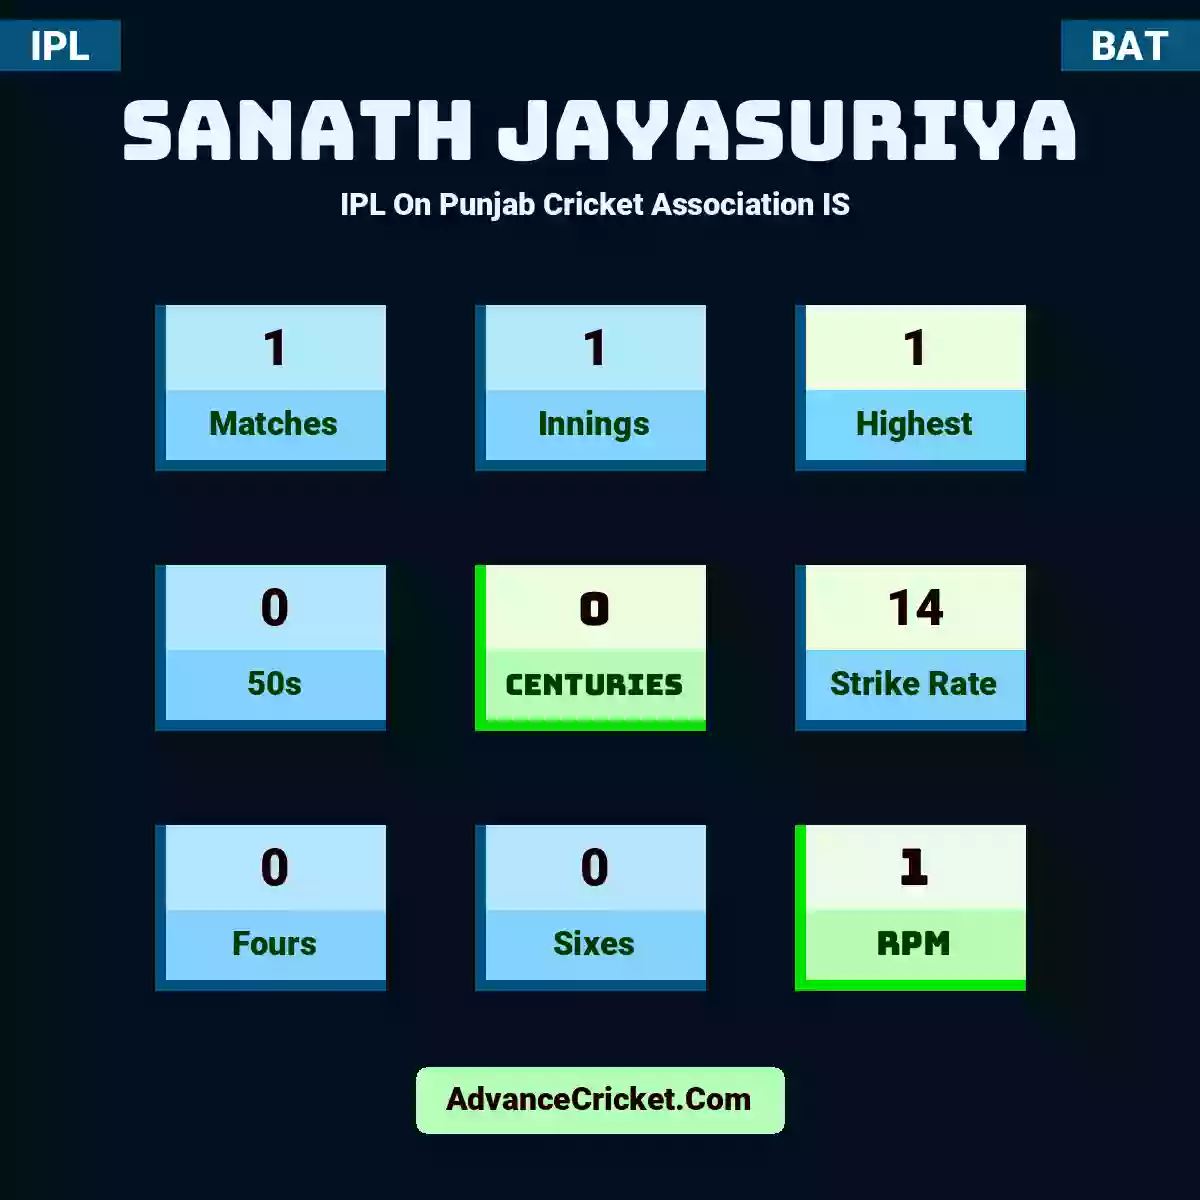 Sanath Jayasuriya IPL  On Punjab Cricket Association IS , Sanath Jayasuriya played 1 matches, scored 1 runs as highest, 0 half-centuries, and 0 centuries, with a strike rate of 14. S.Jayasuriya hit 0 fours and 0 sixes, with an RPM of 1.